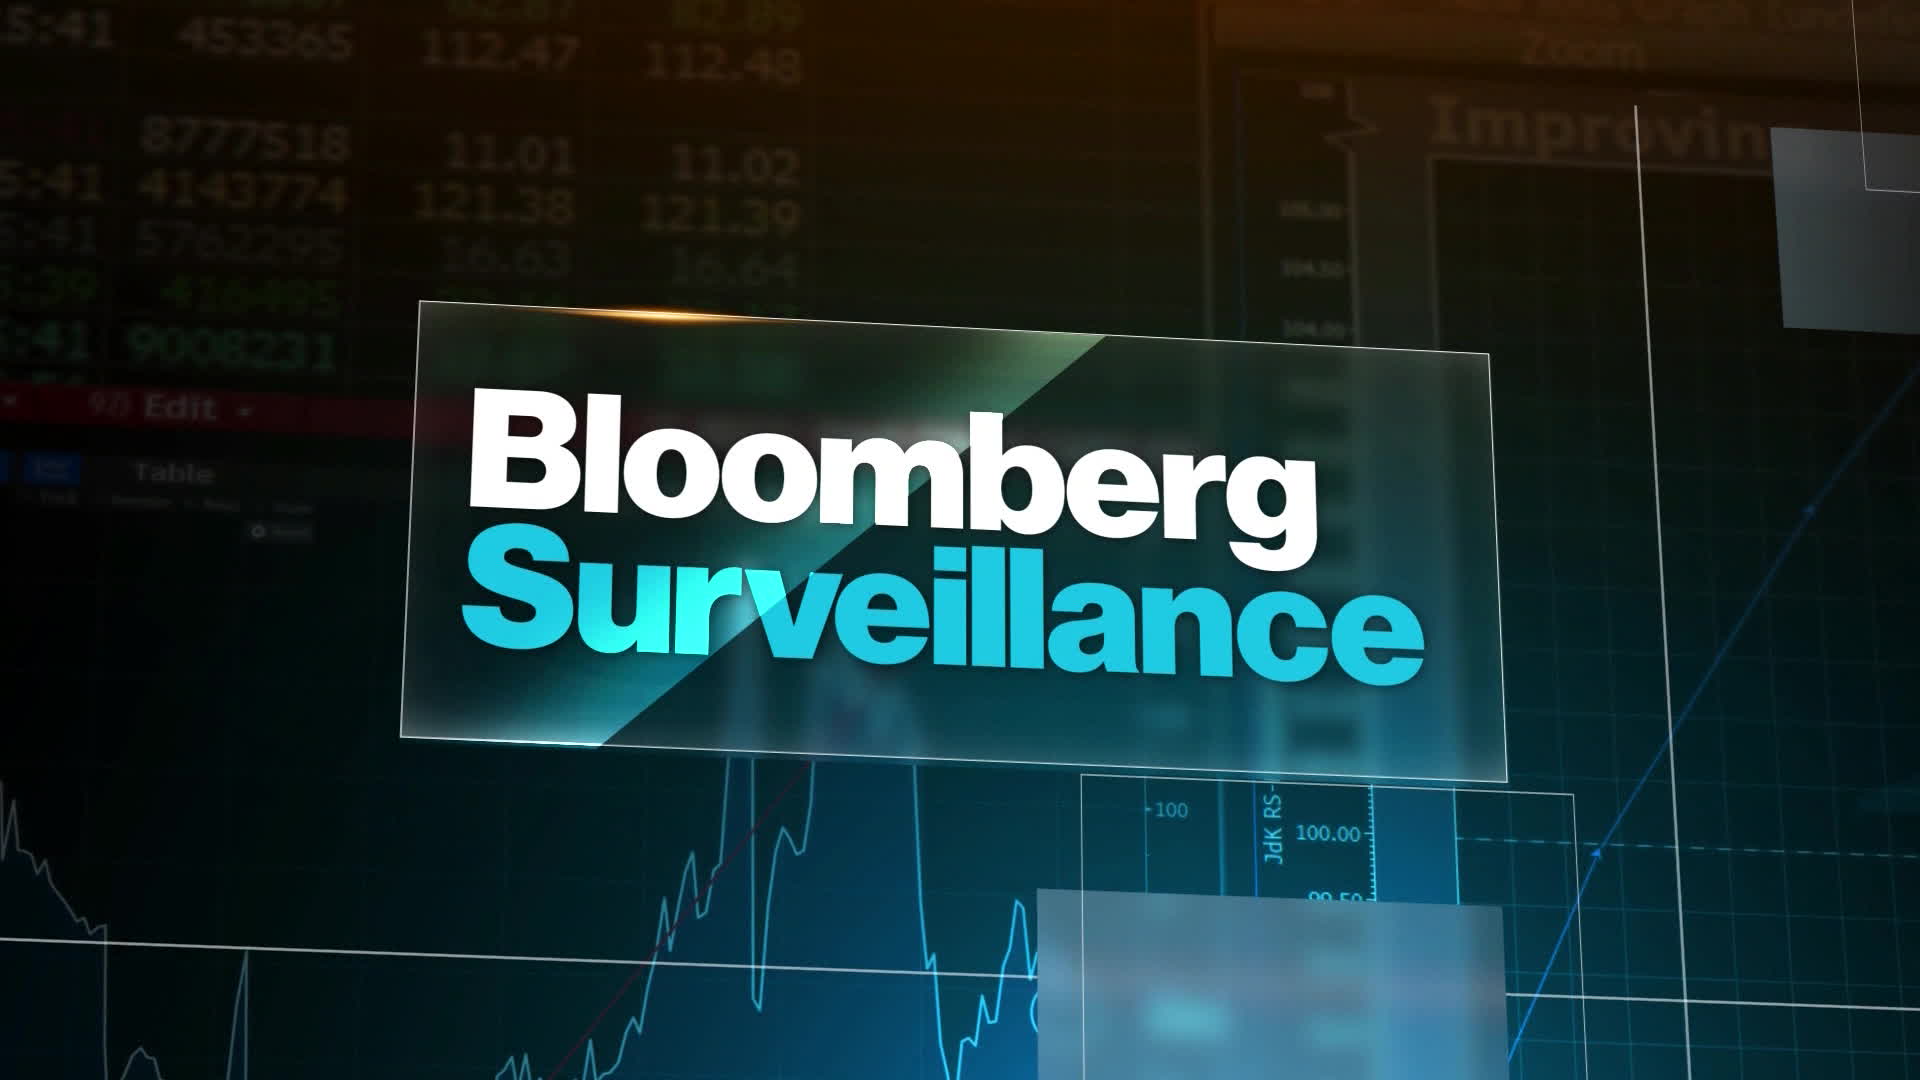 'Bloomberg Surveillance Simulcast' (02/24/2023)